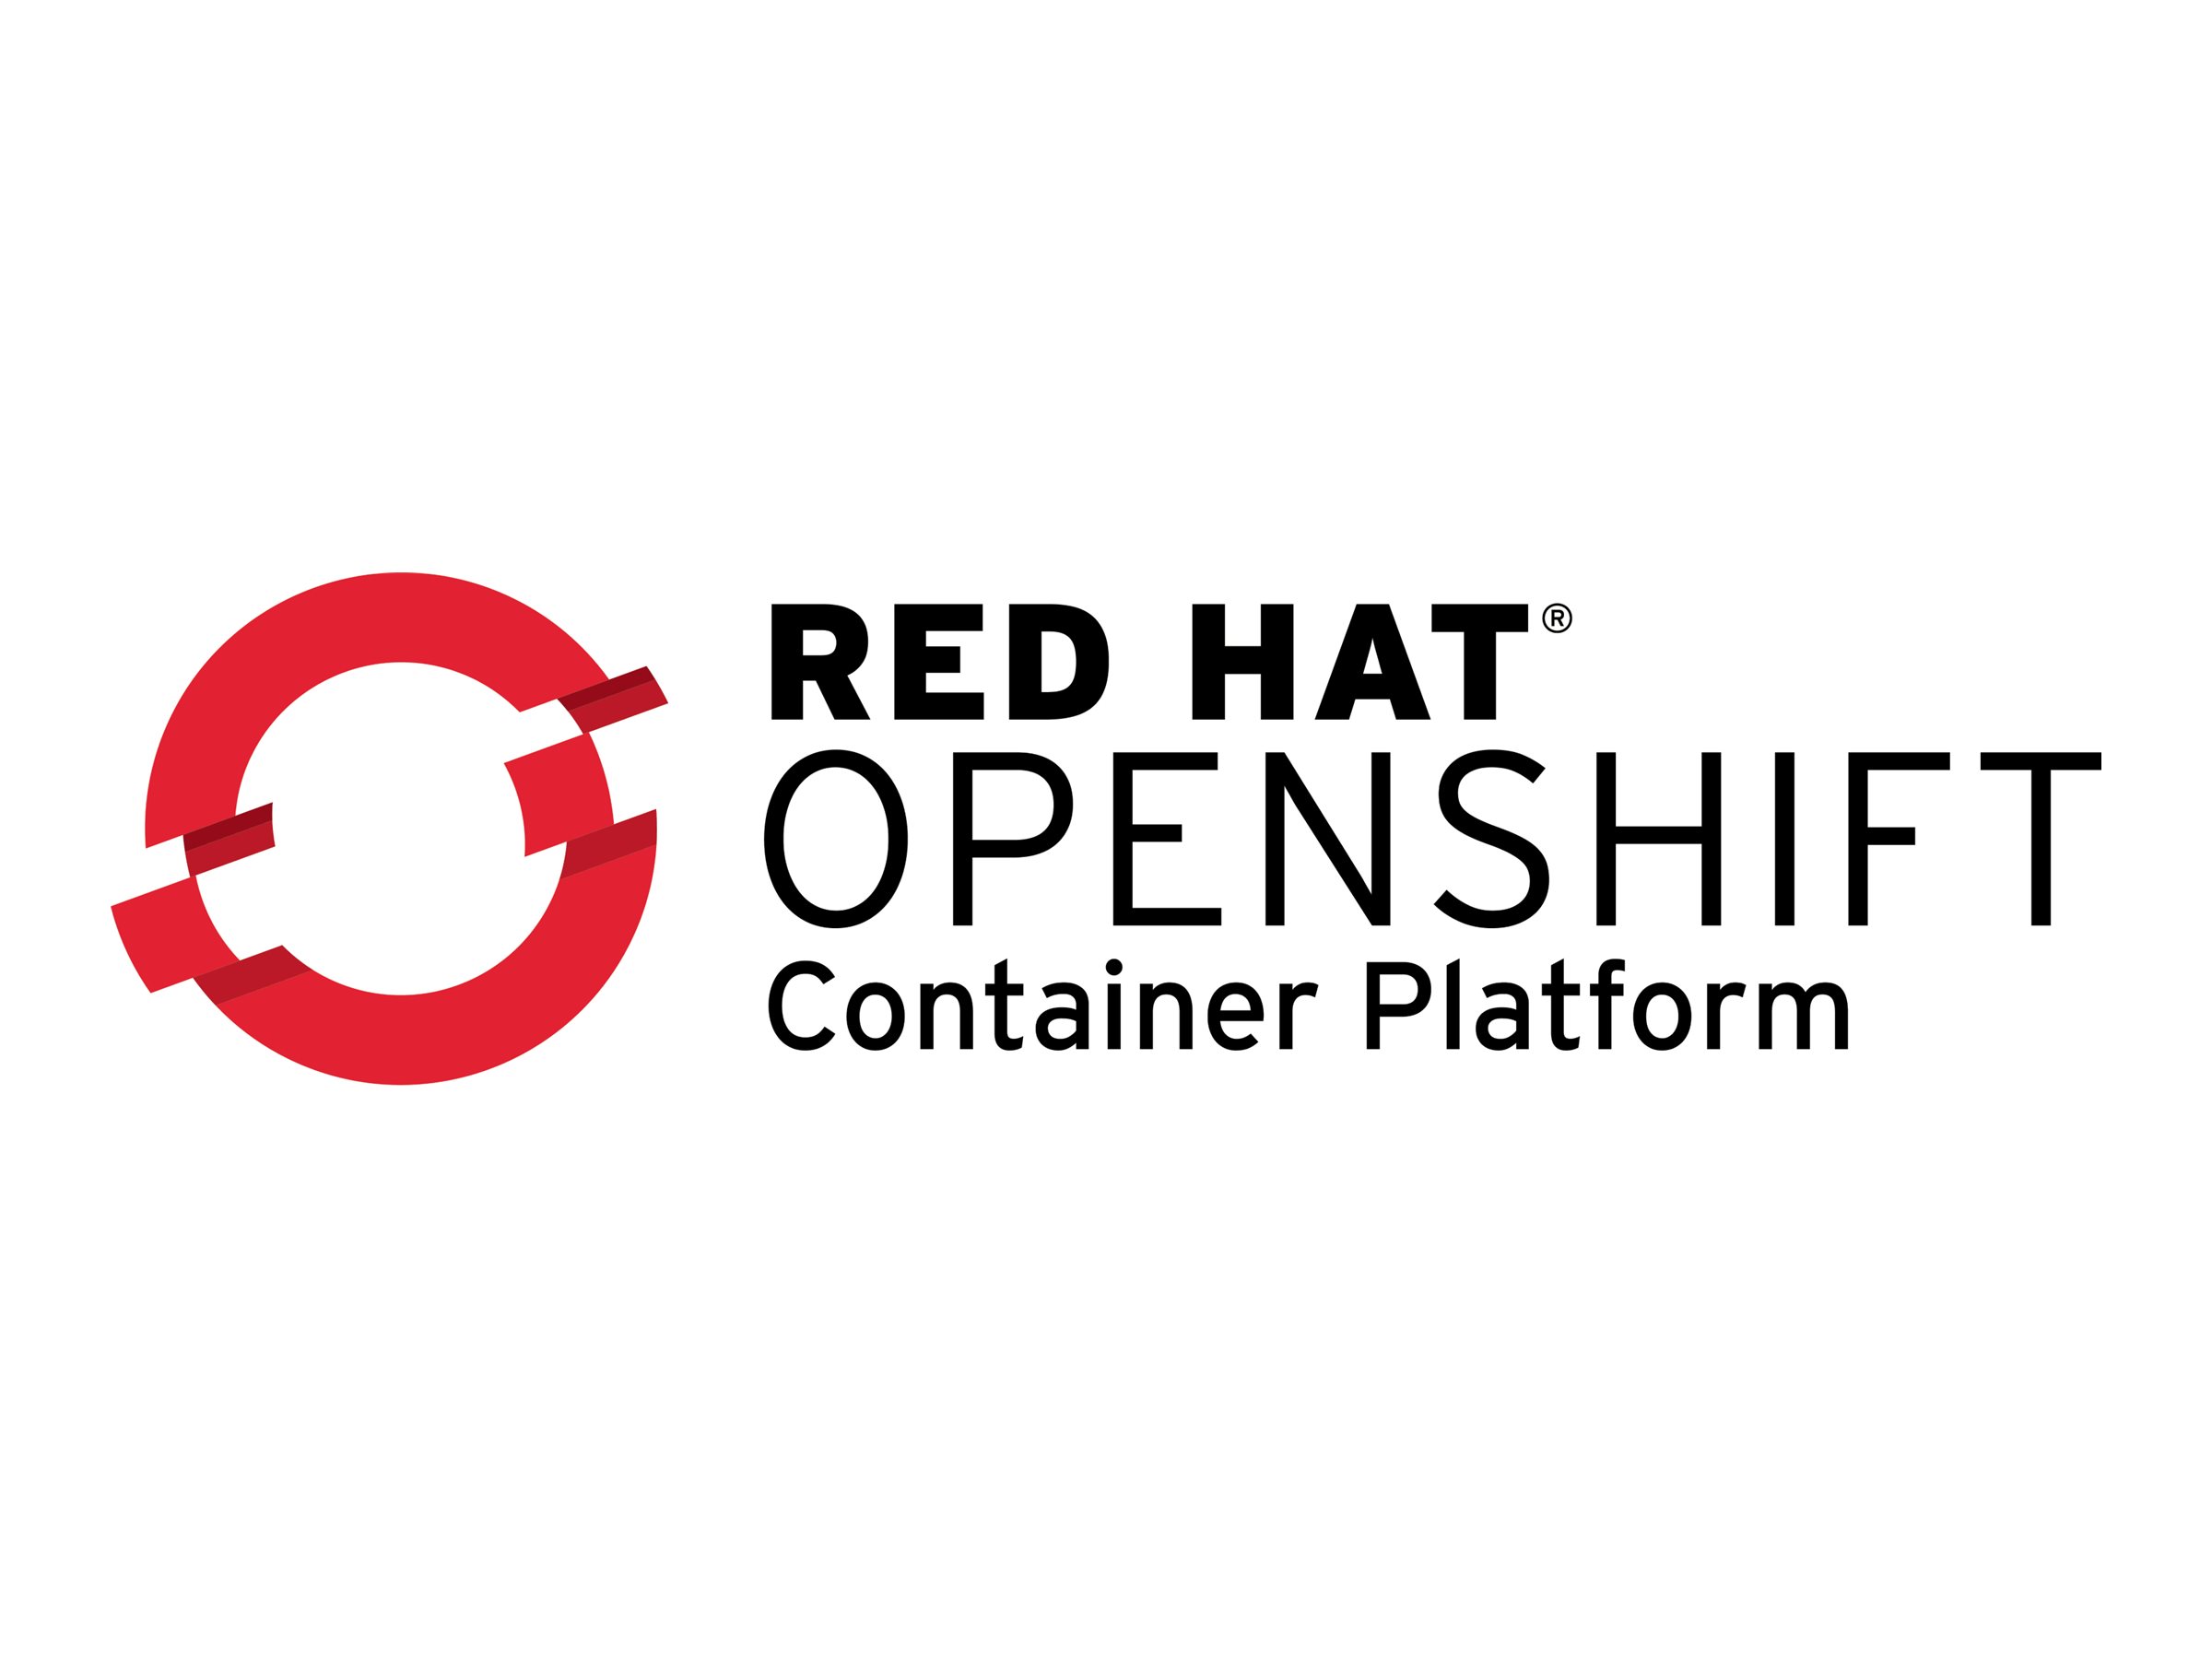 Red Hat OpenShift Container Platform for Red Hat Enterprise Linux